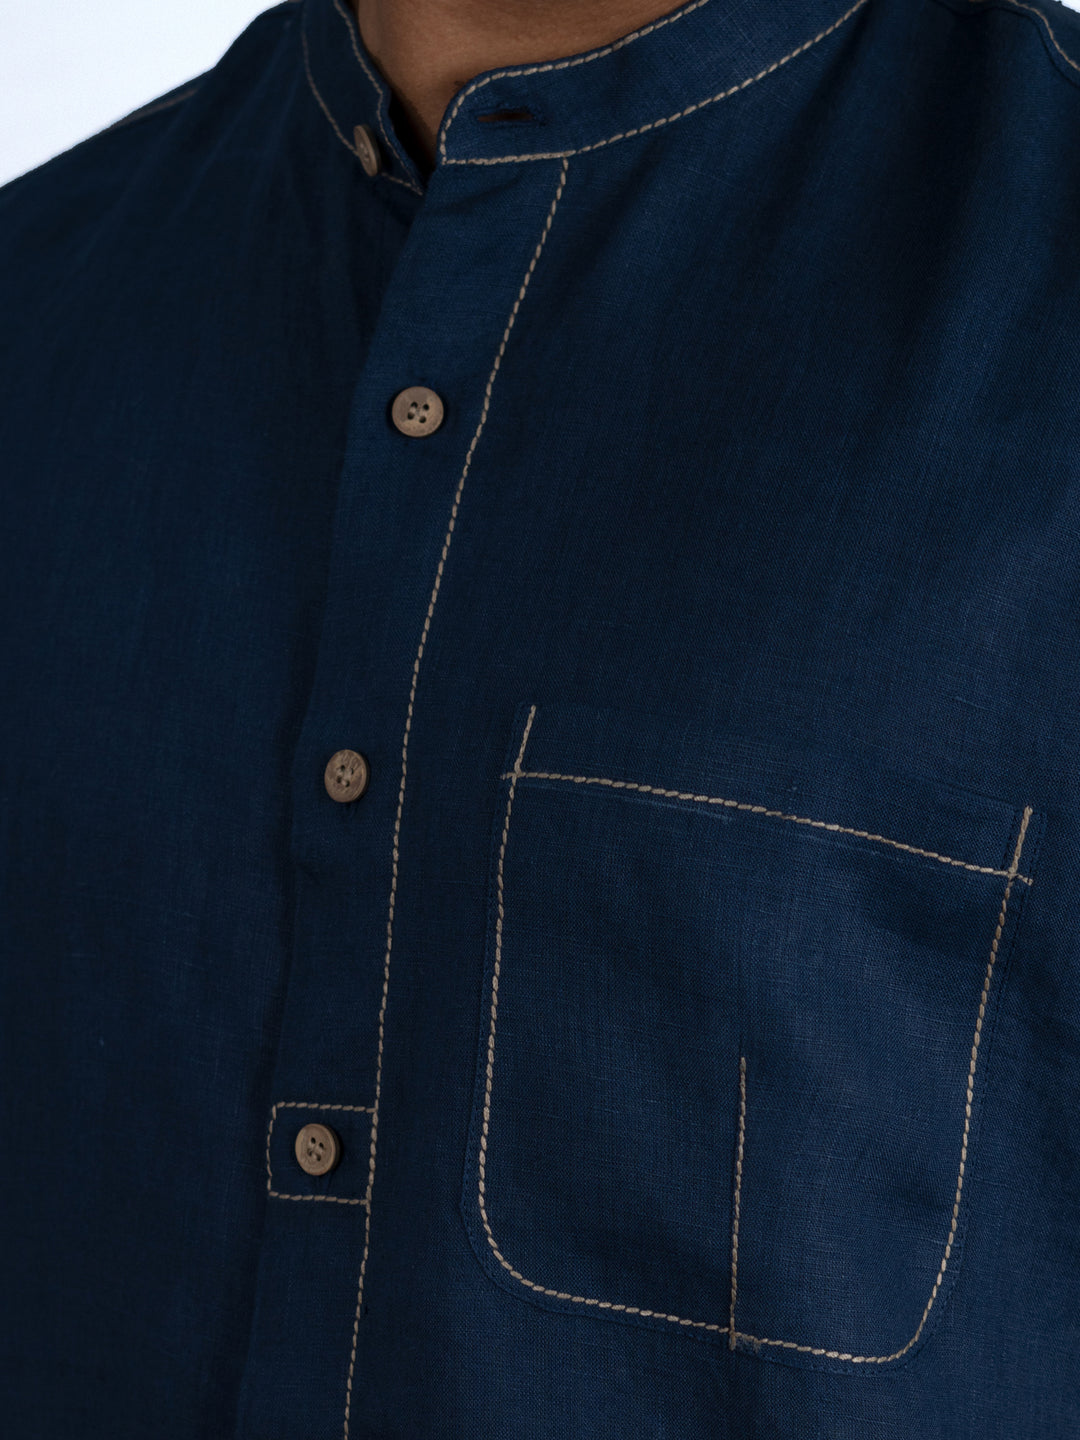 Desmond - Pure Linen Stitch Detailed Half Sleeve Shirt - Blue